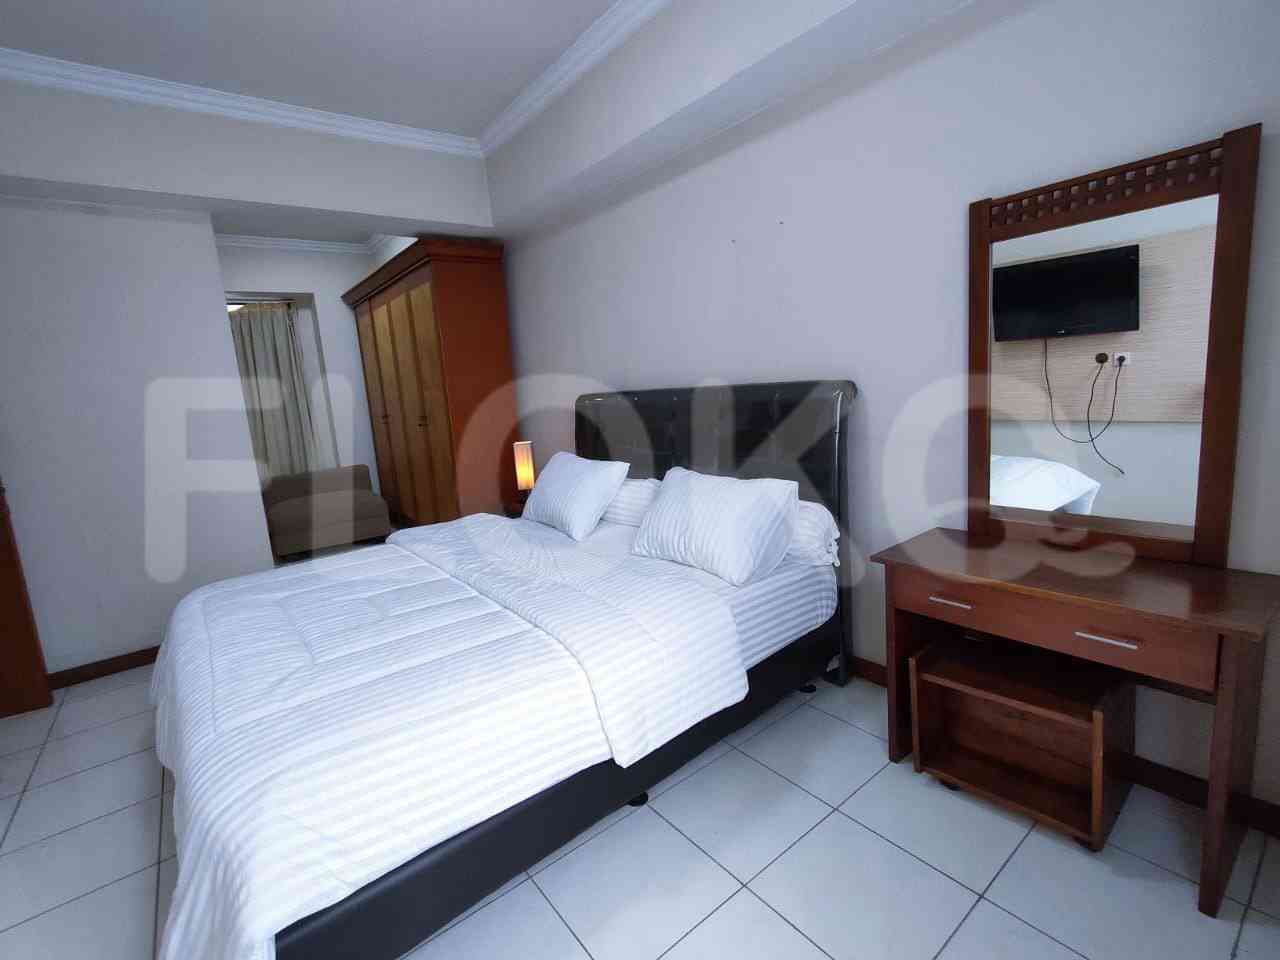 2 Bedroom on 12th Floor for Rent in Aryaduta Suites Semanggi - fsu0f7 2